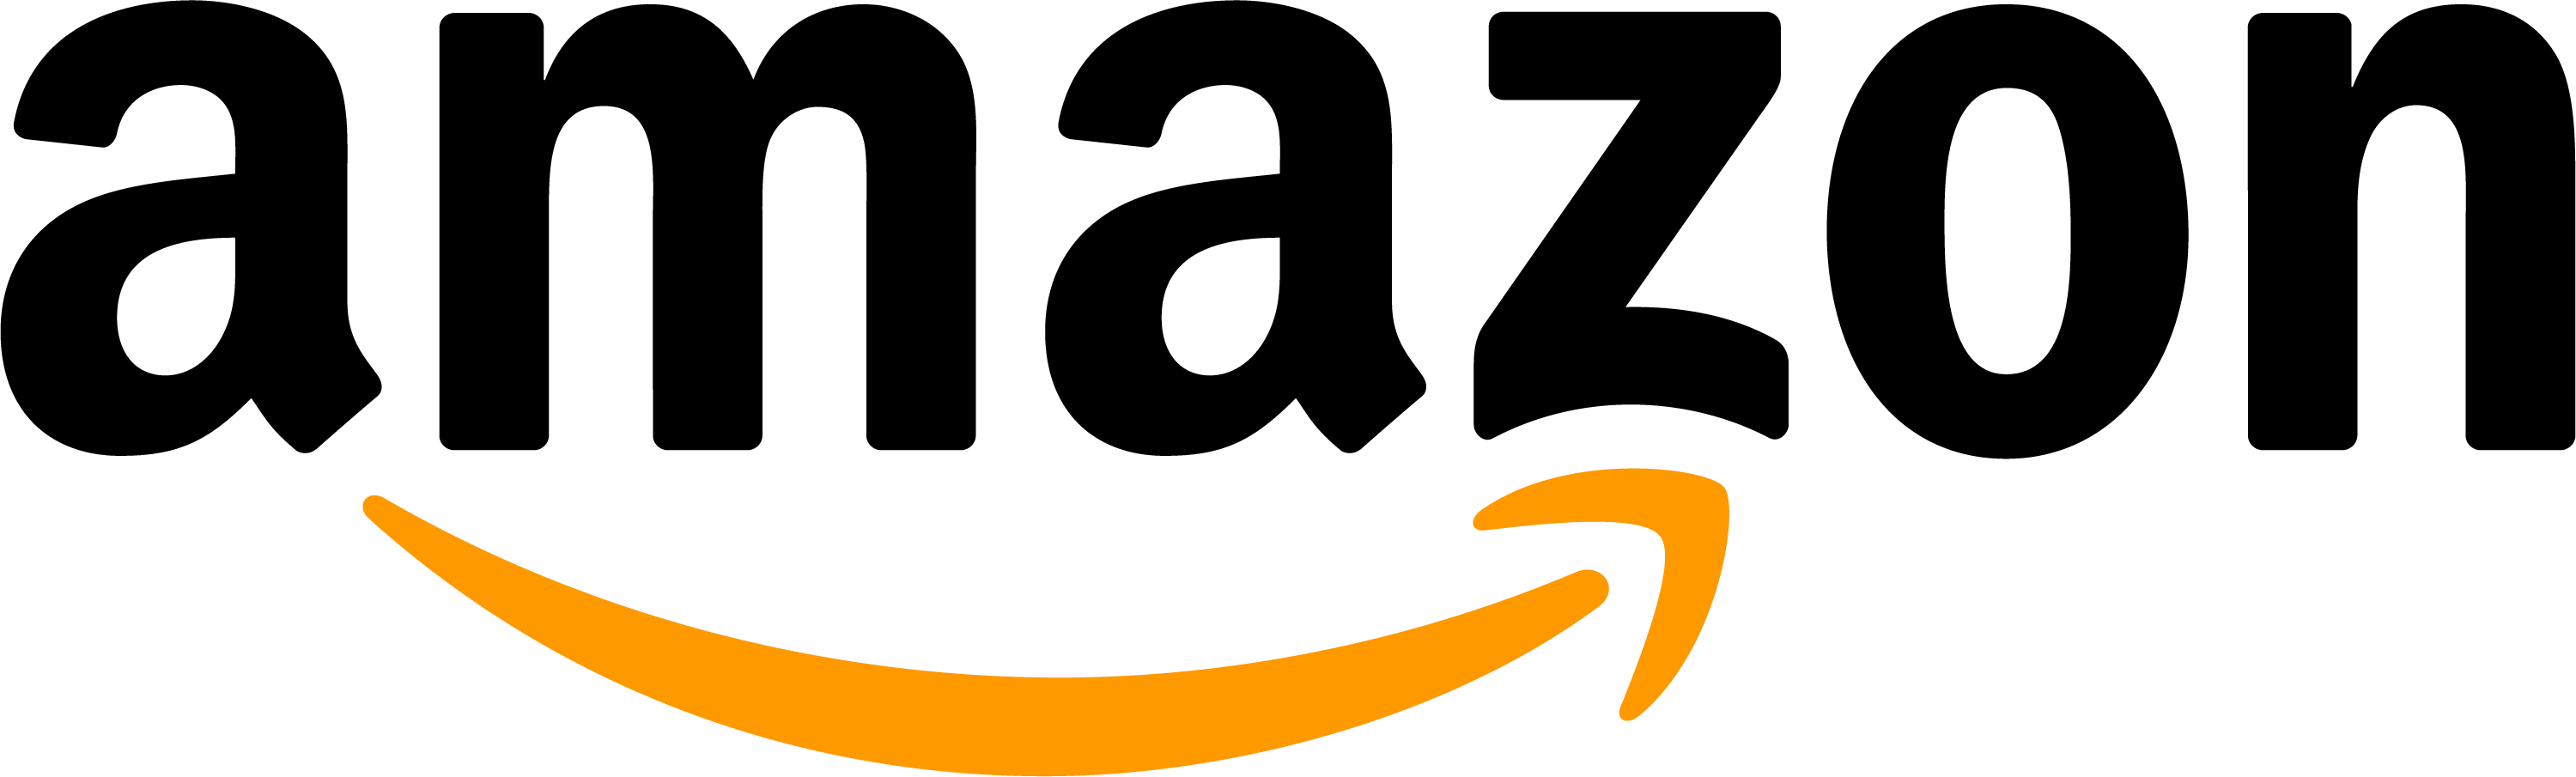 Link to Amazon